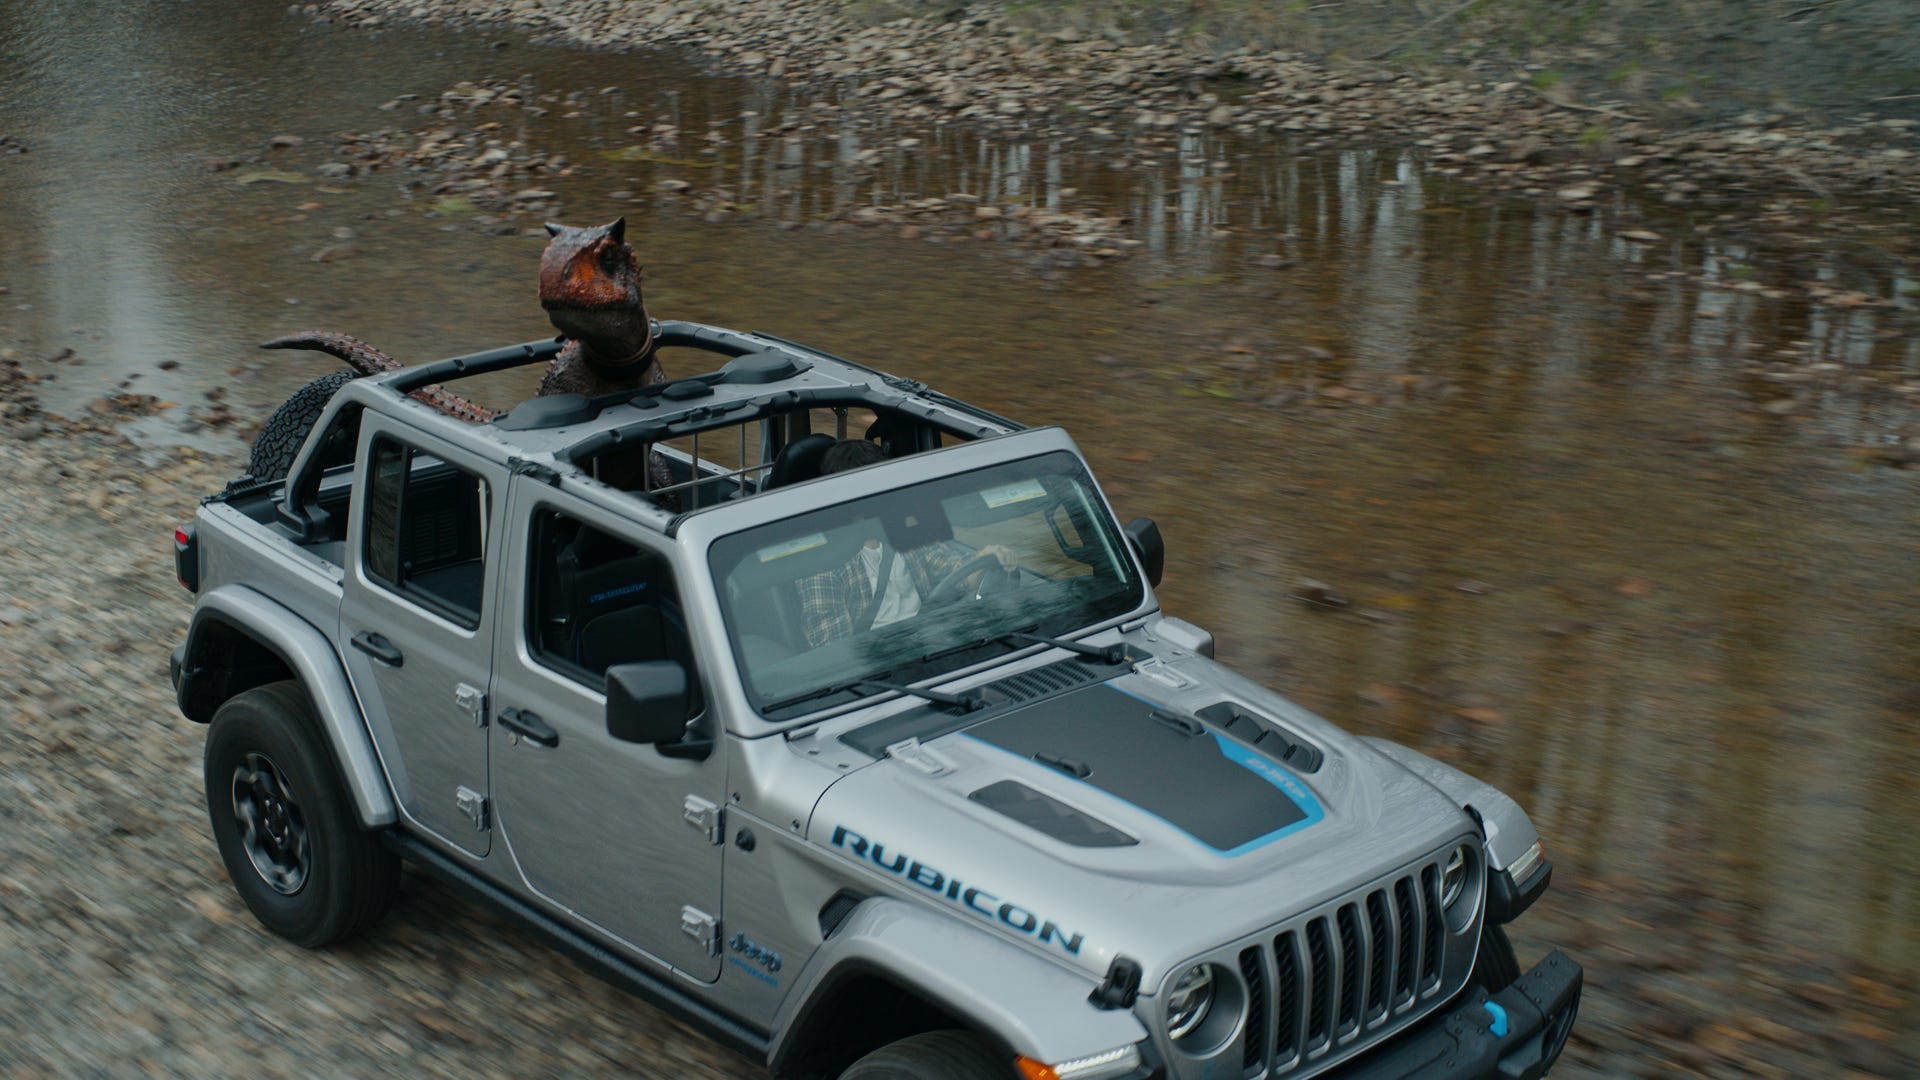 Jeep Wrangler 4xe ad has tie to final 'Jurassic World' movie